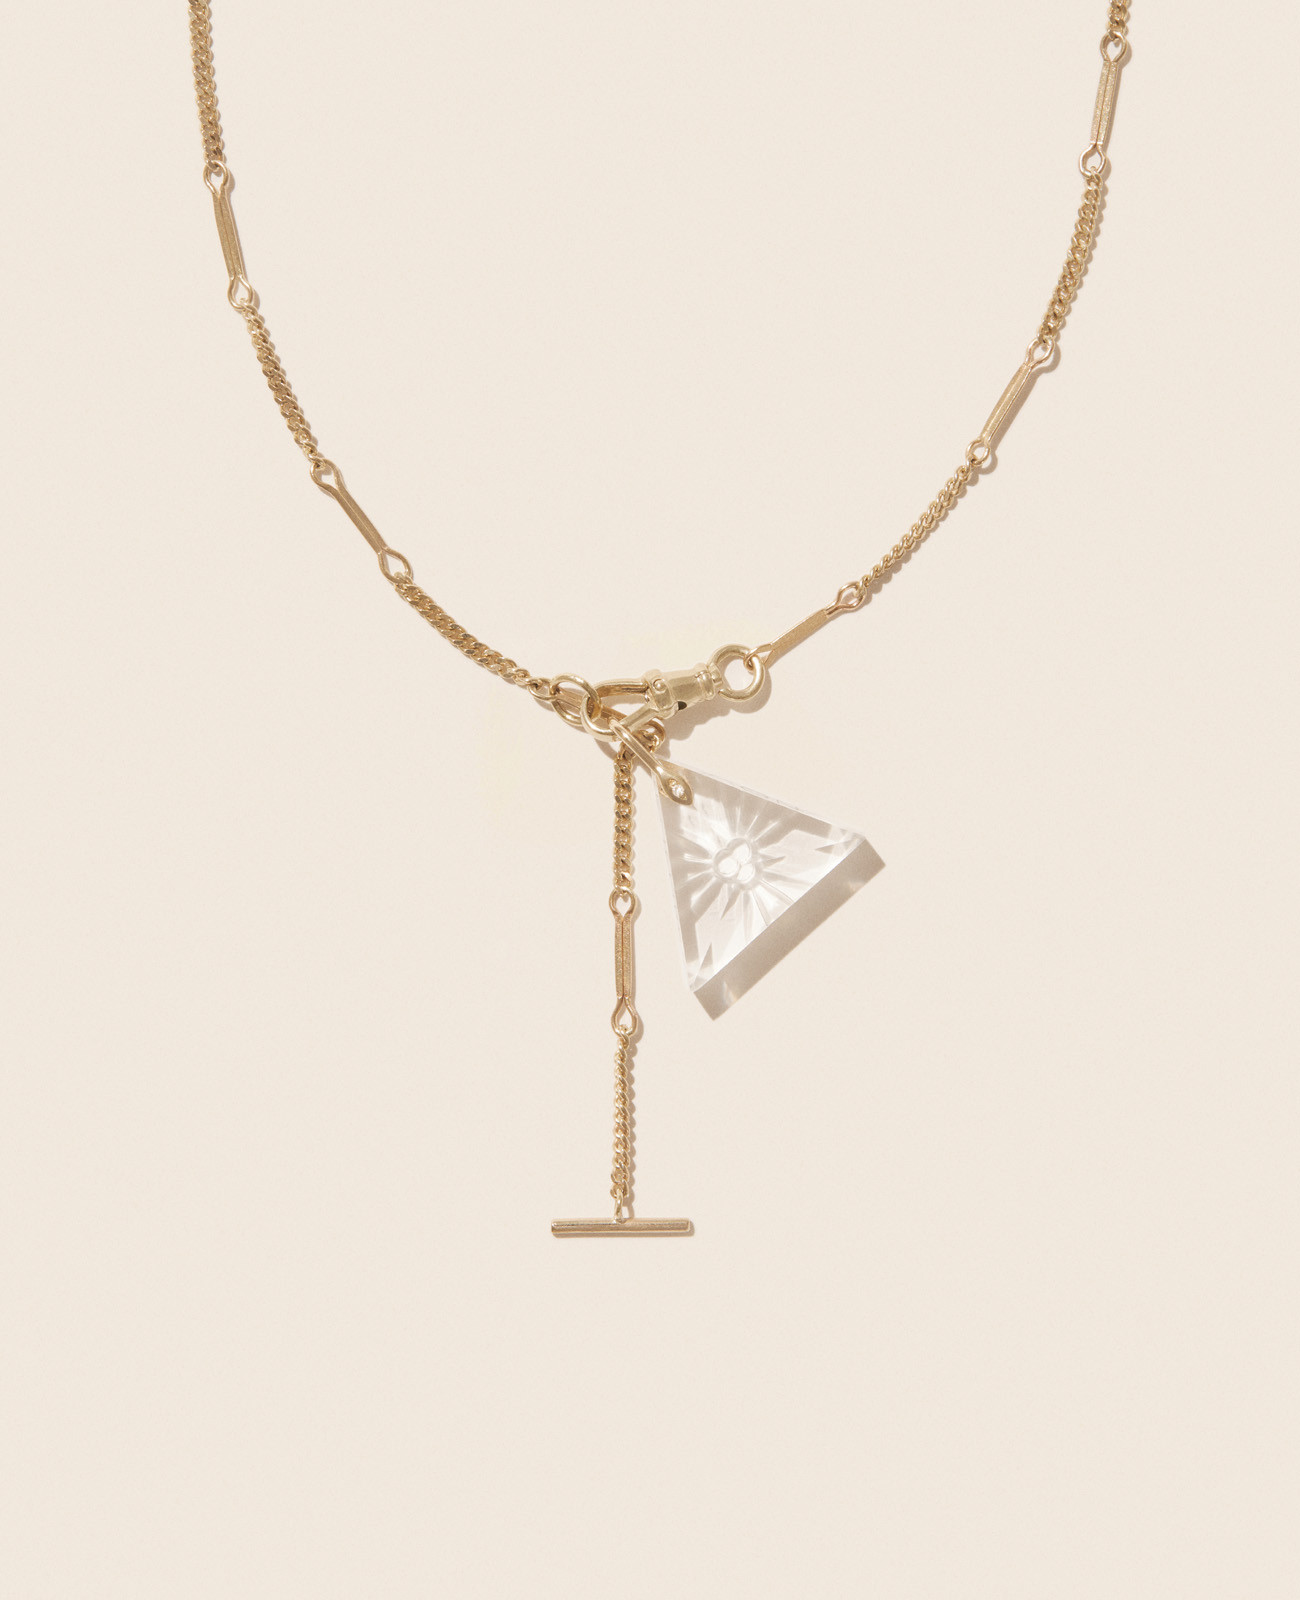 PETRA N°4 necklace pascale monvoisin jewelry paris